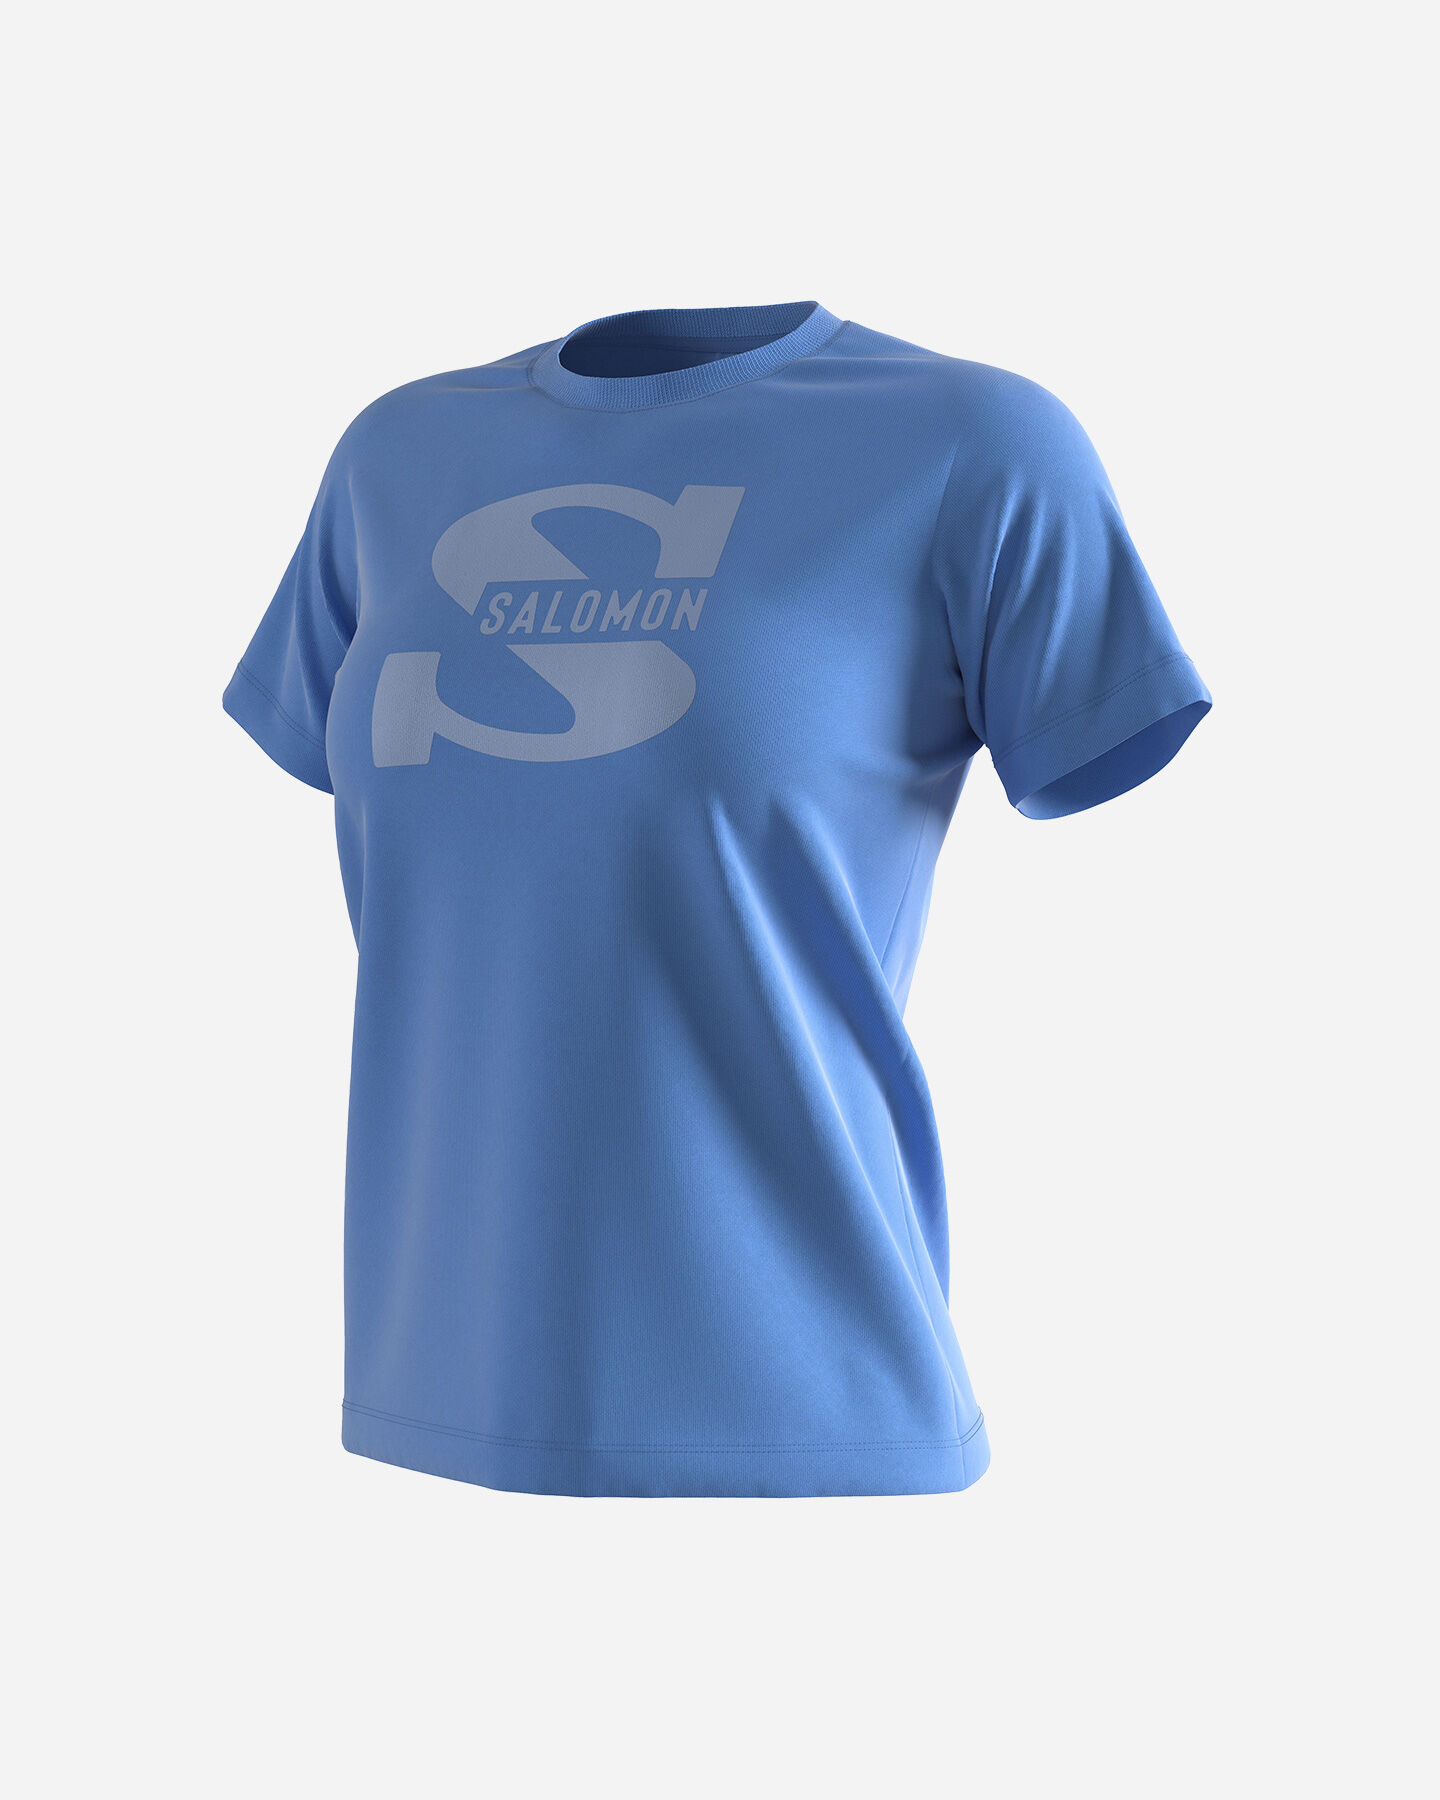  T-Shirt SALOMON OUTLIFE BIG LOGO W S5407802|UNI|L scatto 2